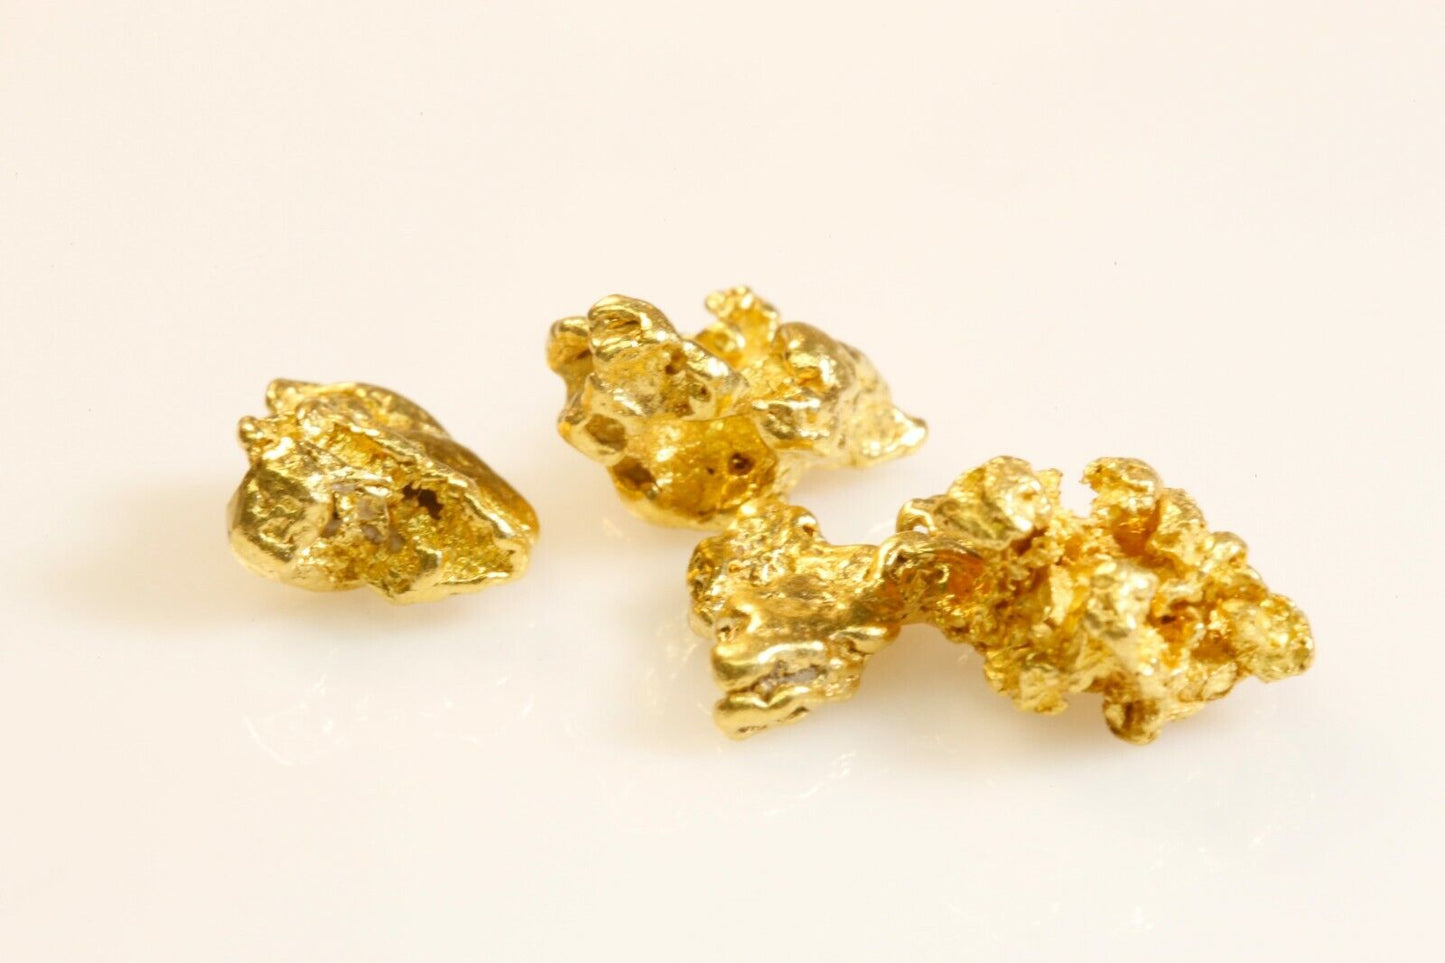 (4) Natural Australian Gold Nuggets 15.8 Gram